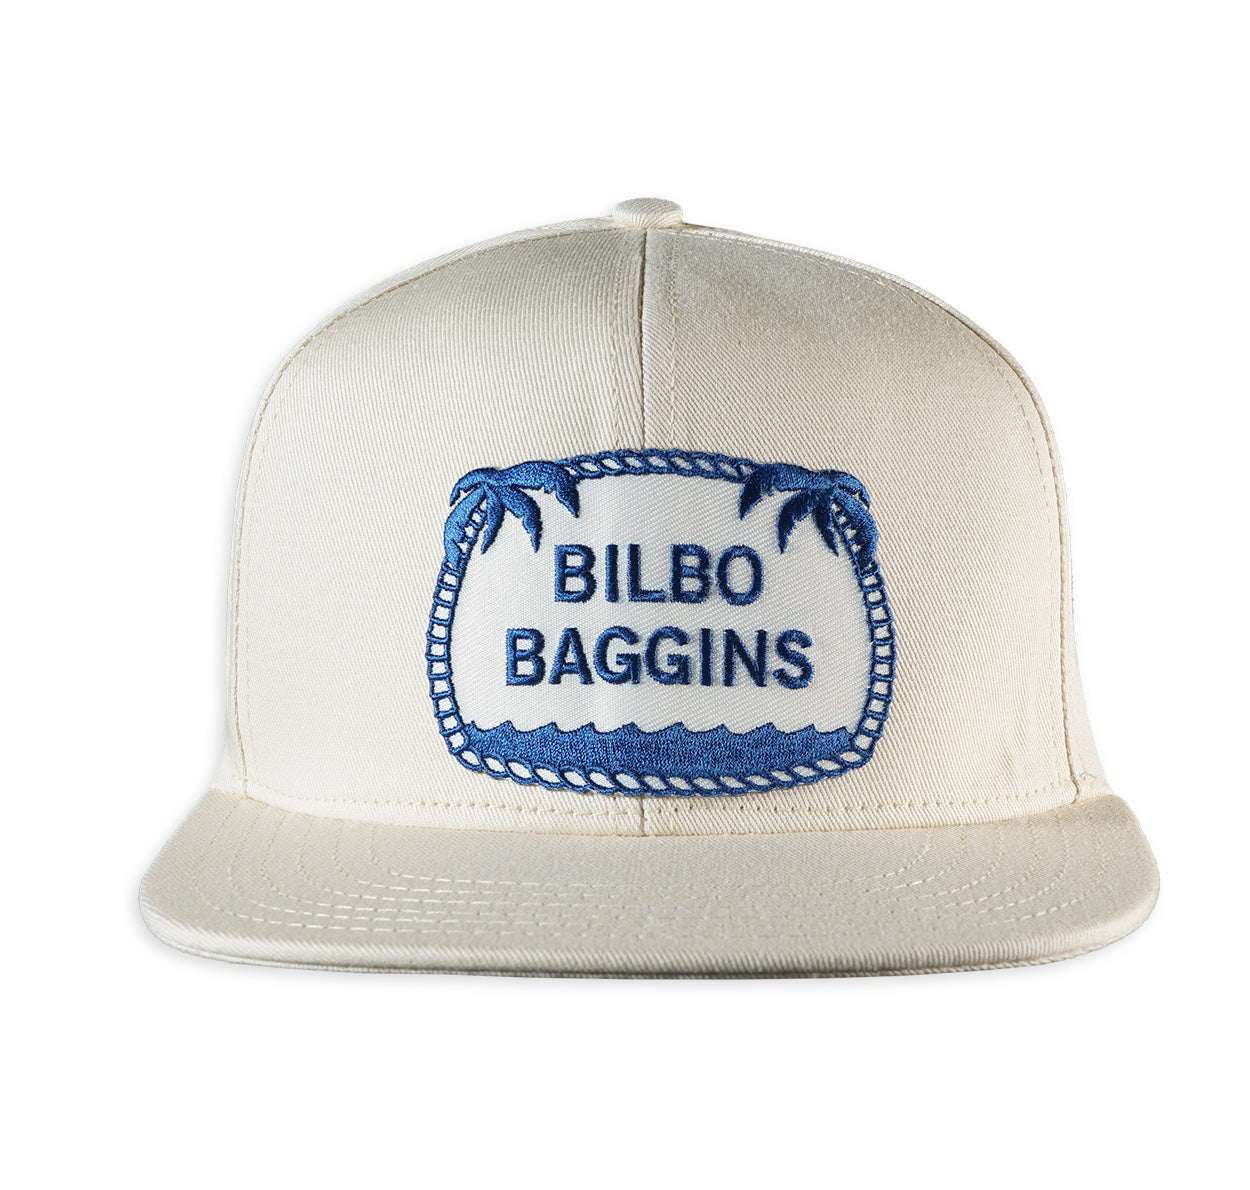 Bilbo Baggins ball cap